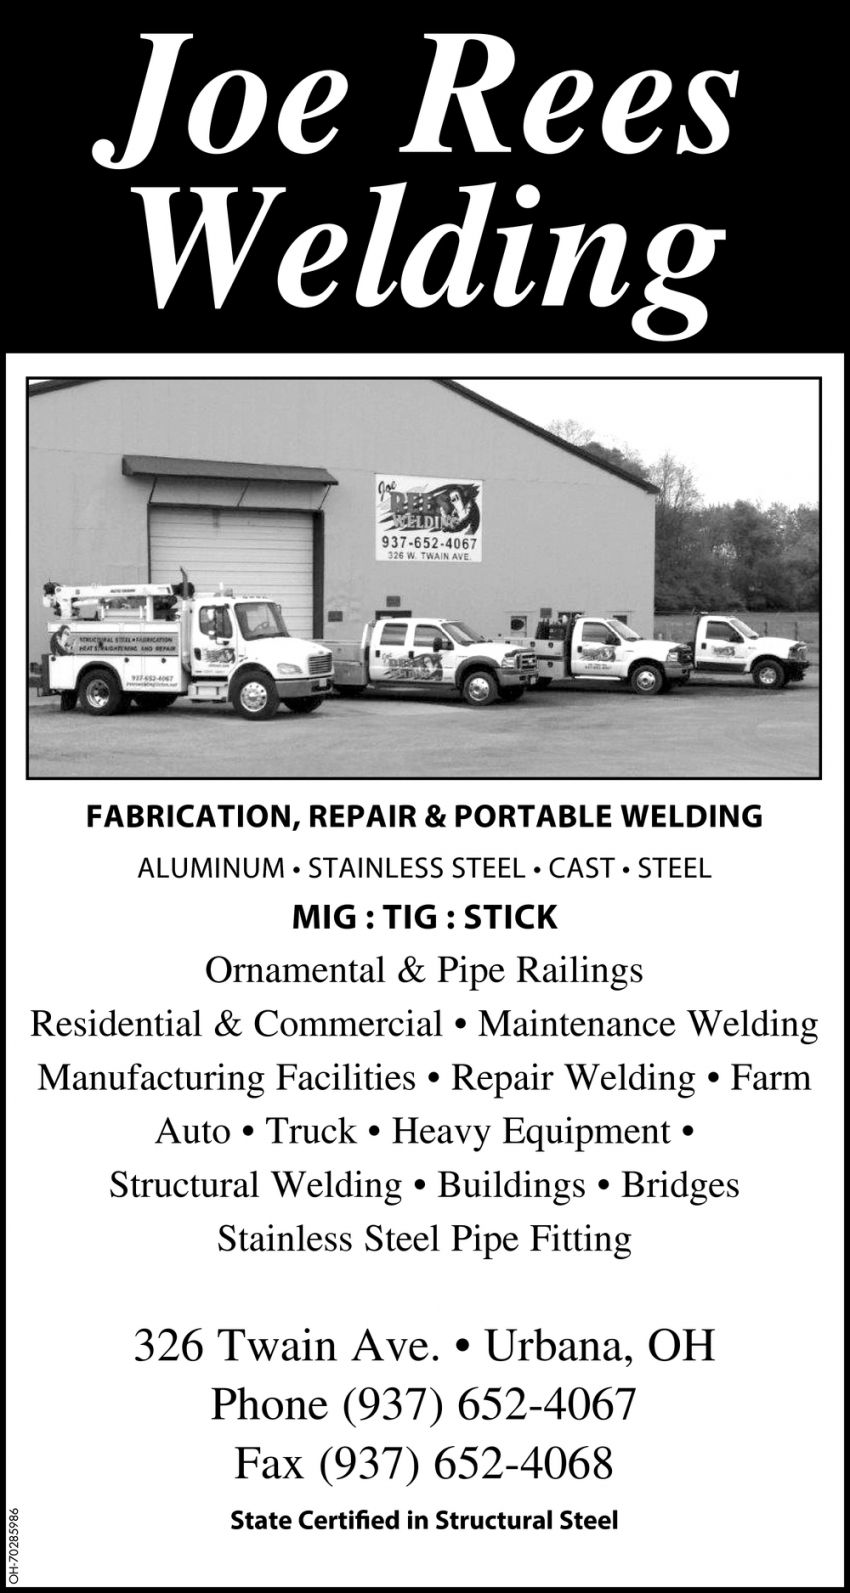 Fabrication, Repair & Portable Welding